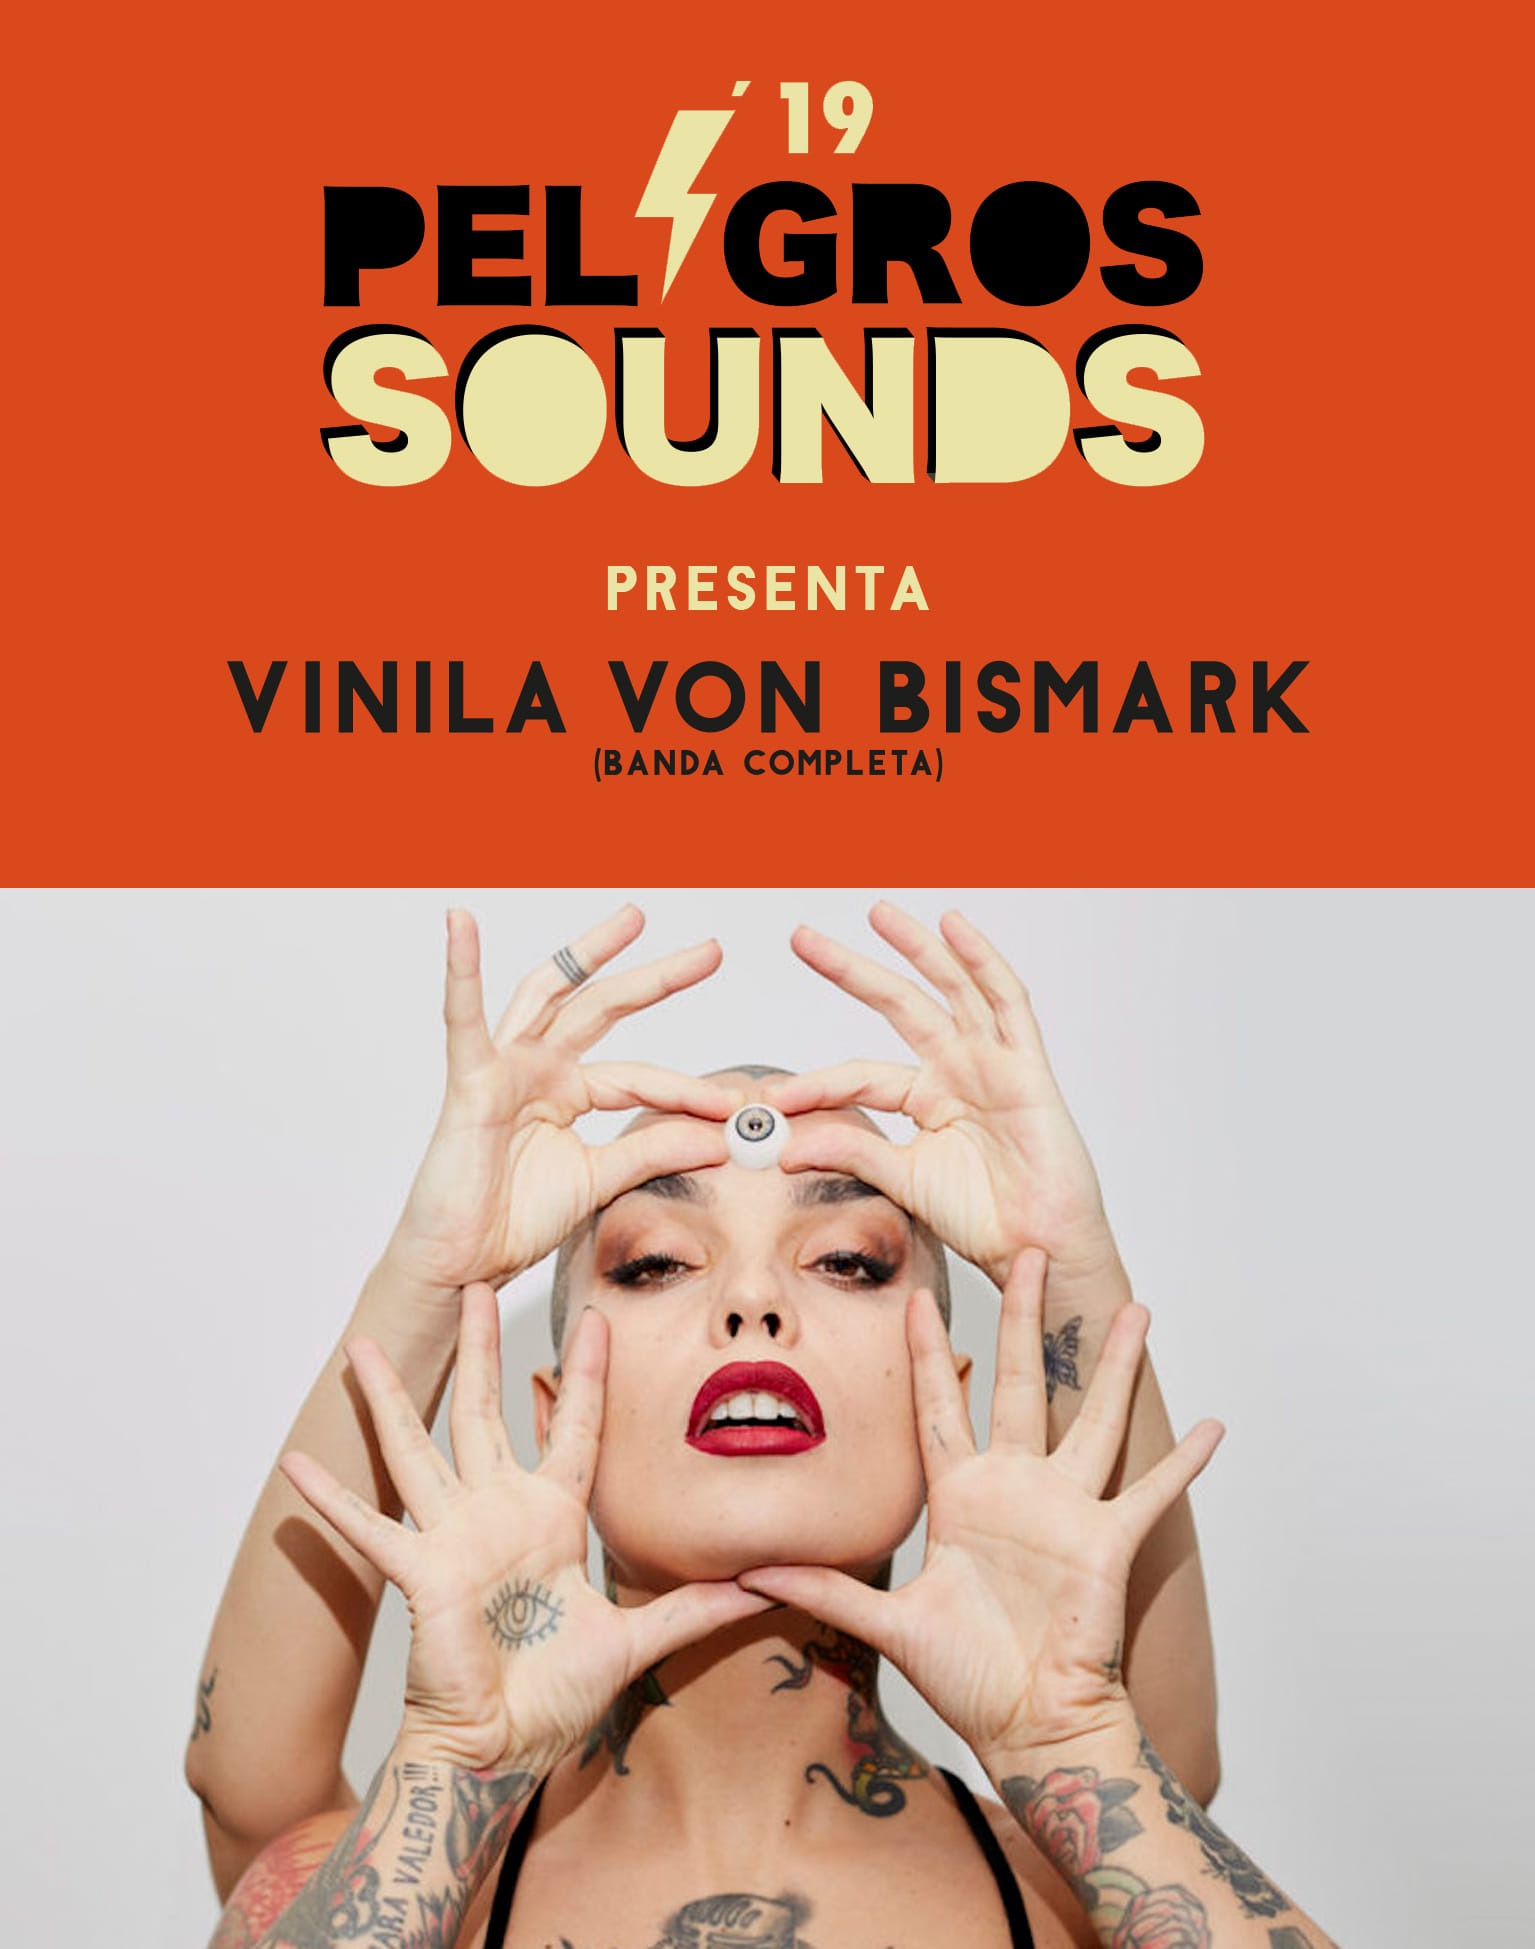 2019- Vinila Von Bismark en el festival peligros sounds